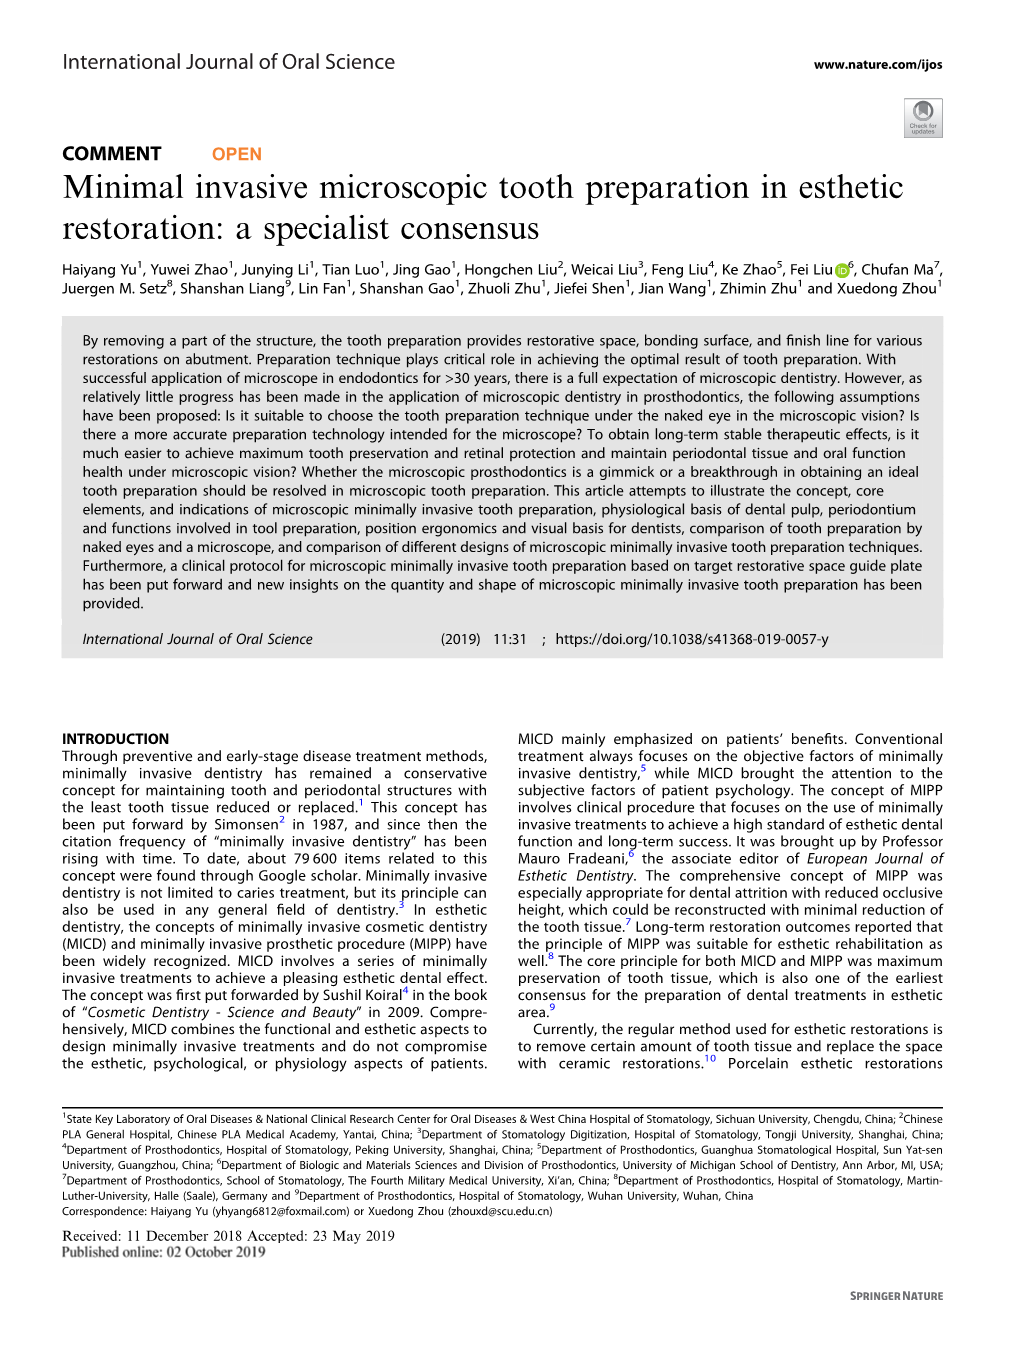 Minimal Invasive Microscopic Tooth Preparation in Esthetic Restoration: a Specialist Consensus